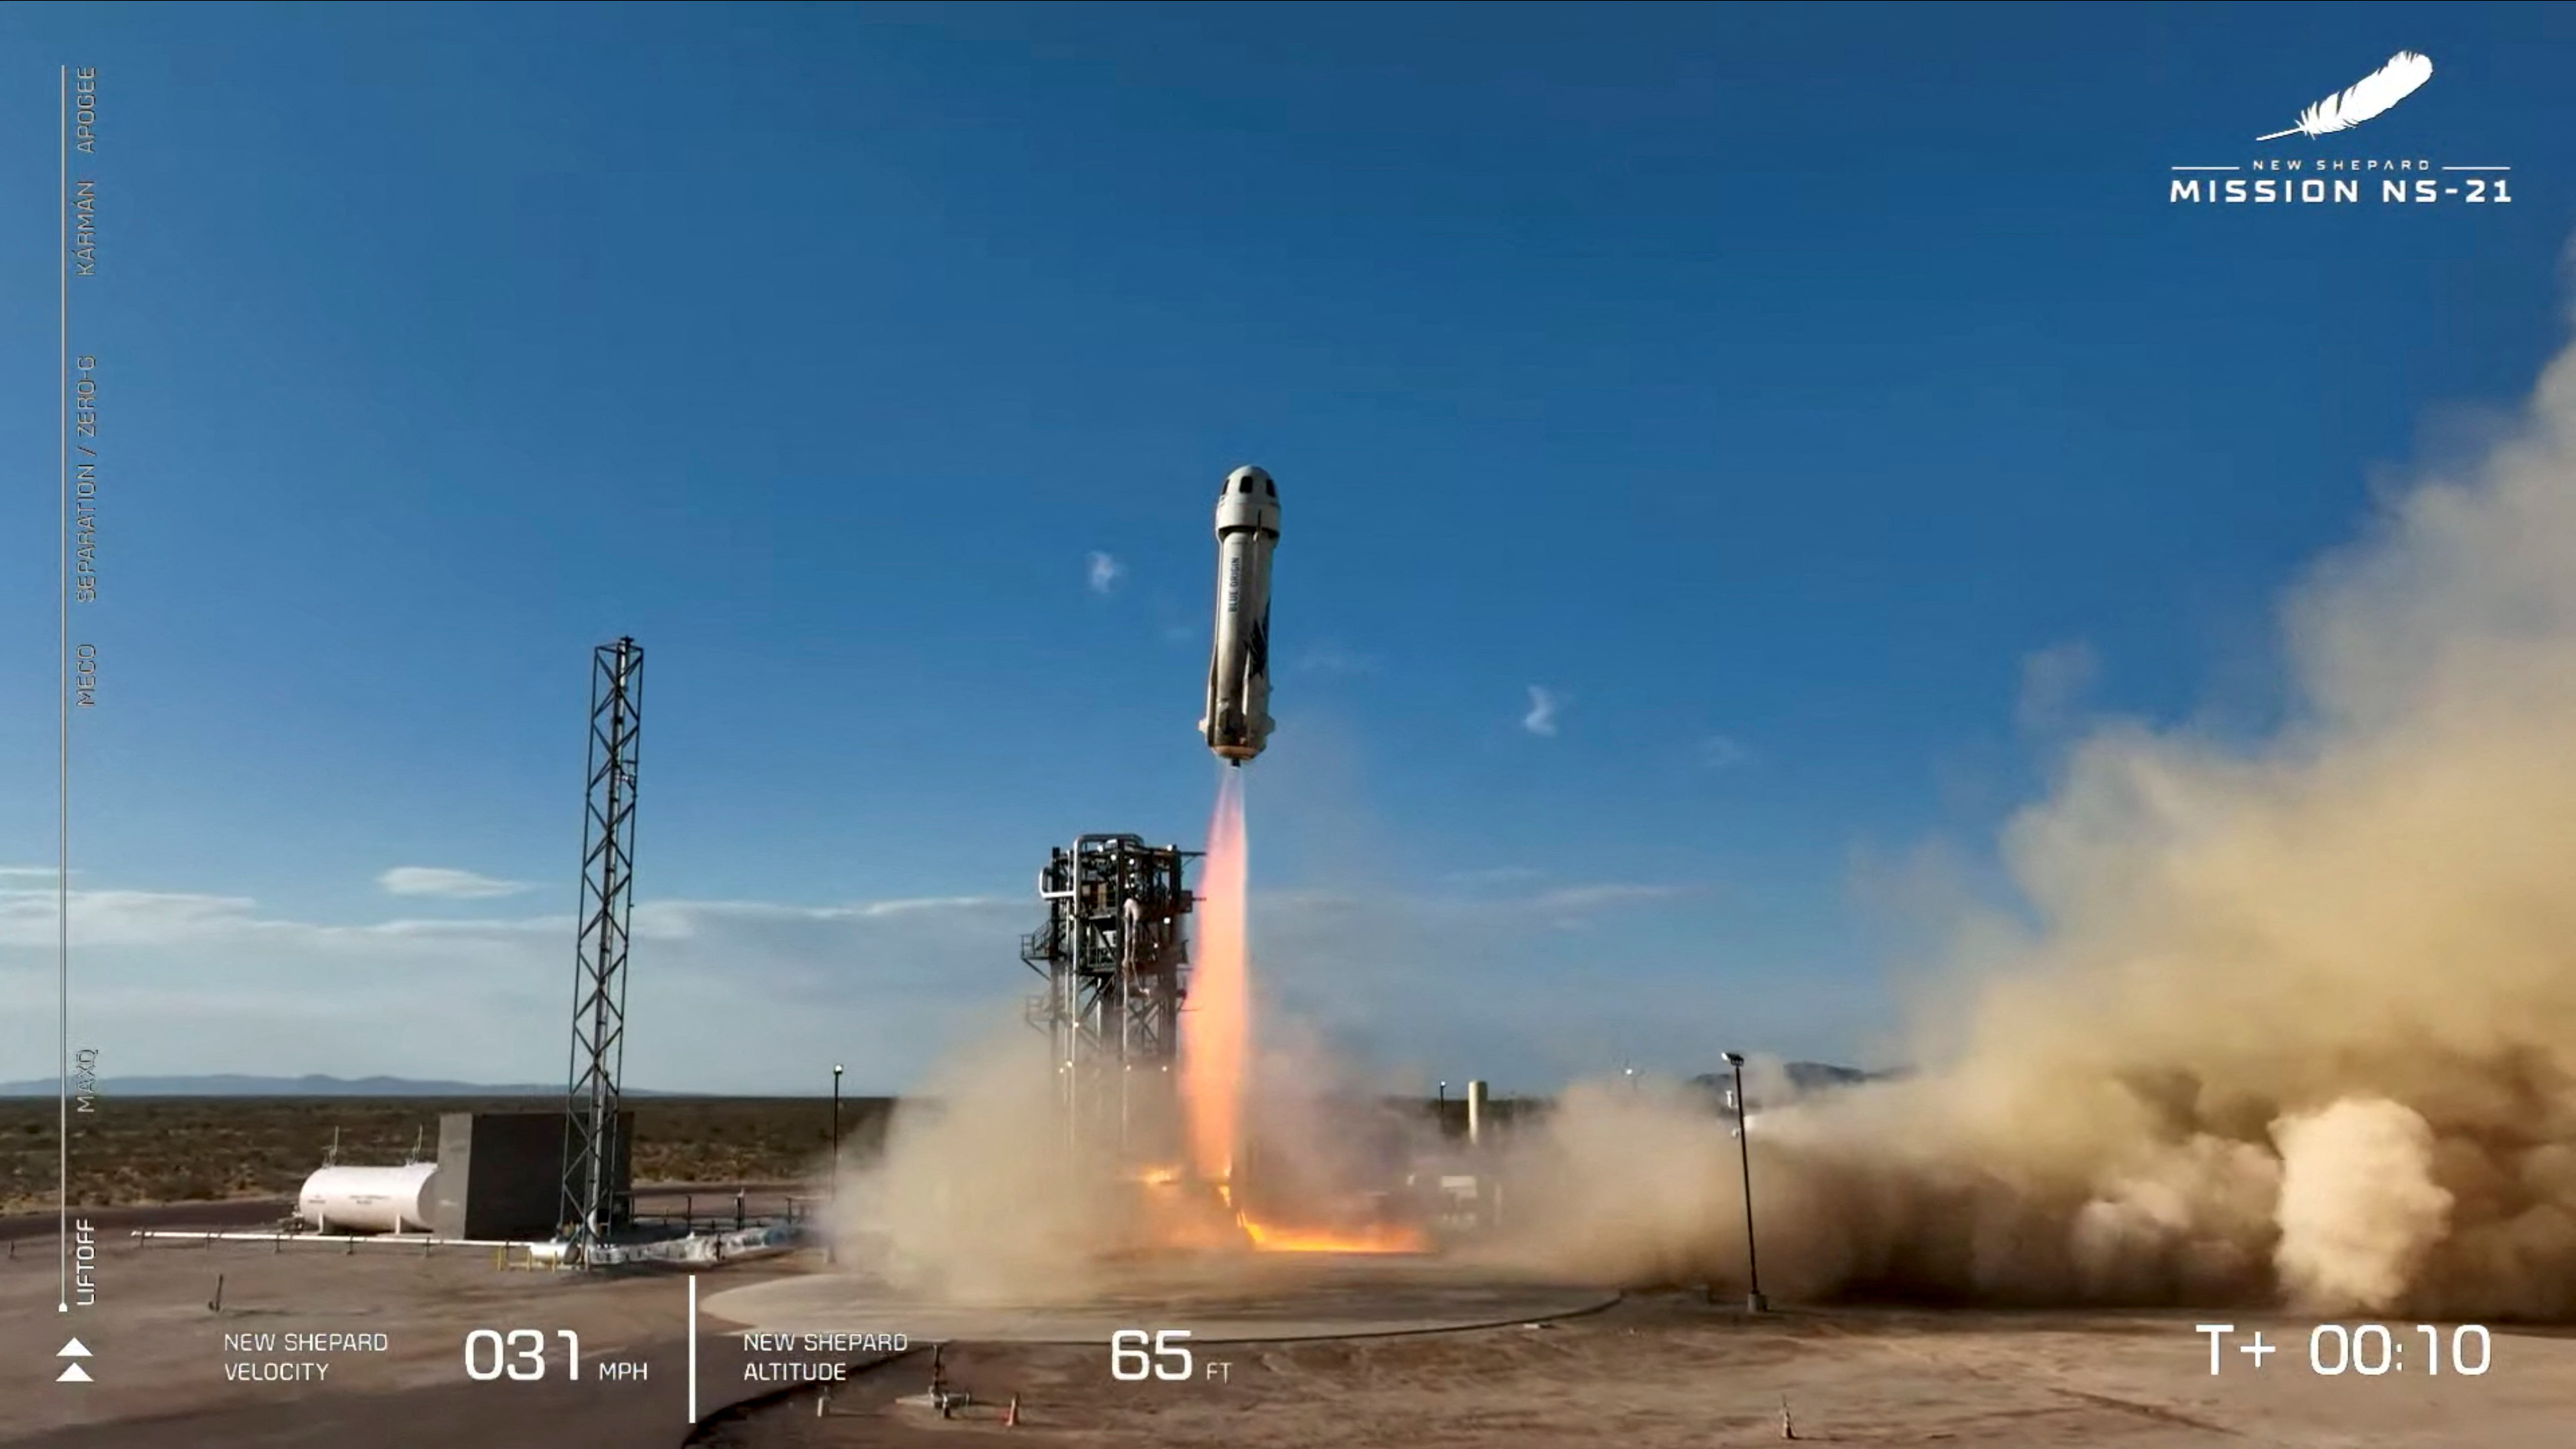 Bezos' Blue Origin completes fifth crewed flight launch Reuters